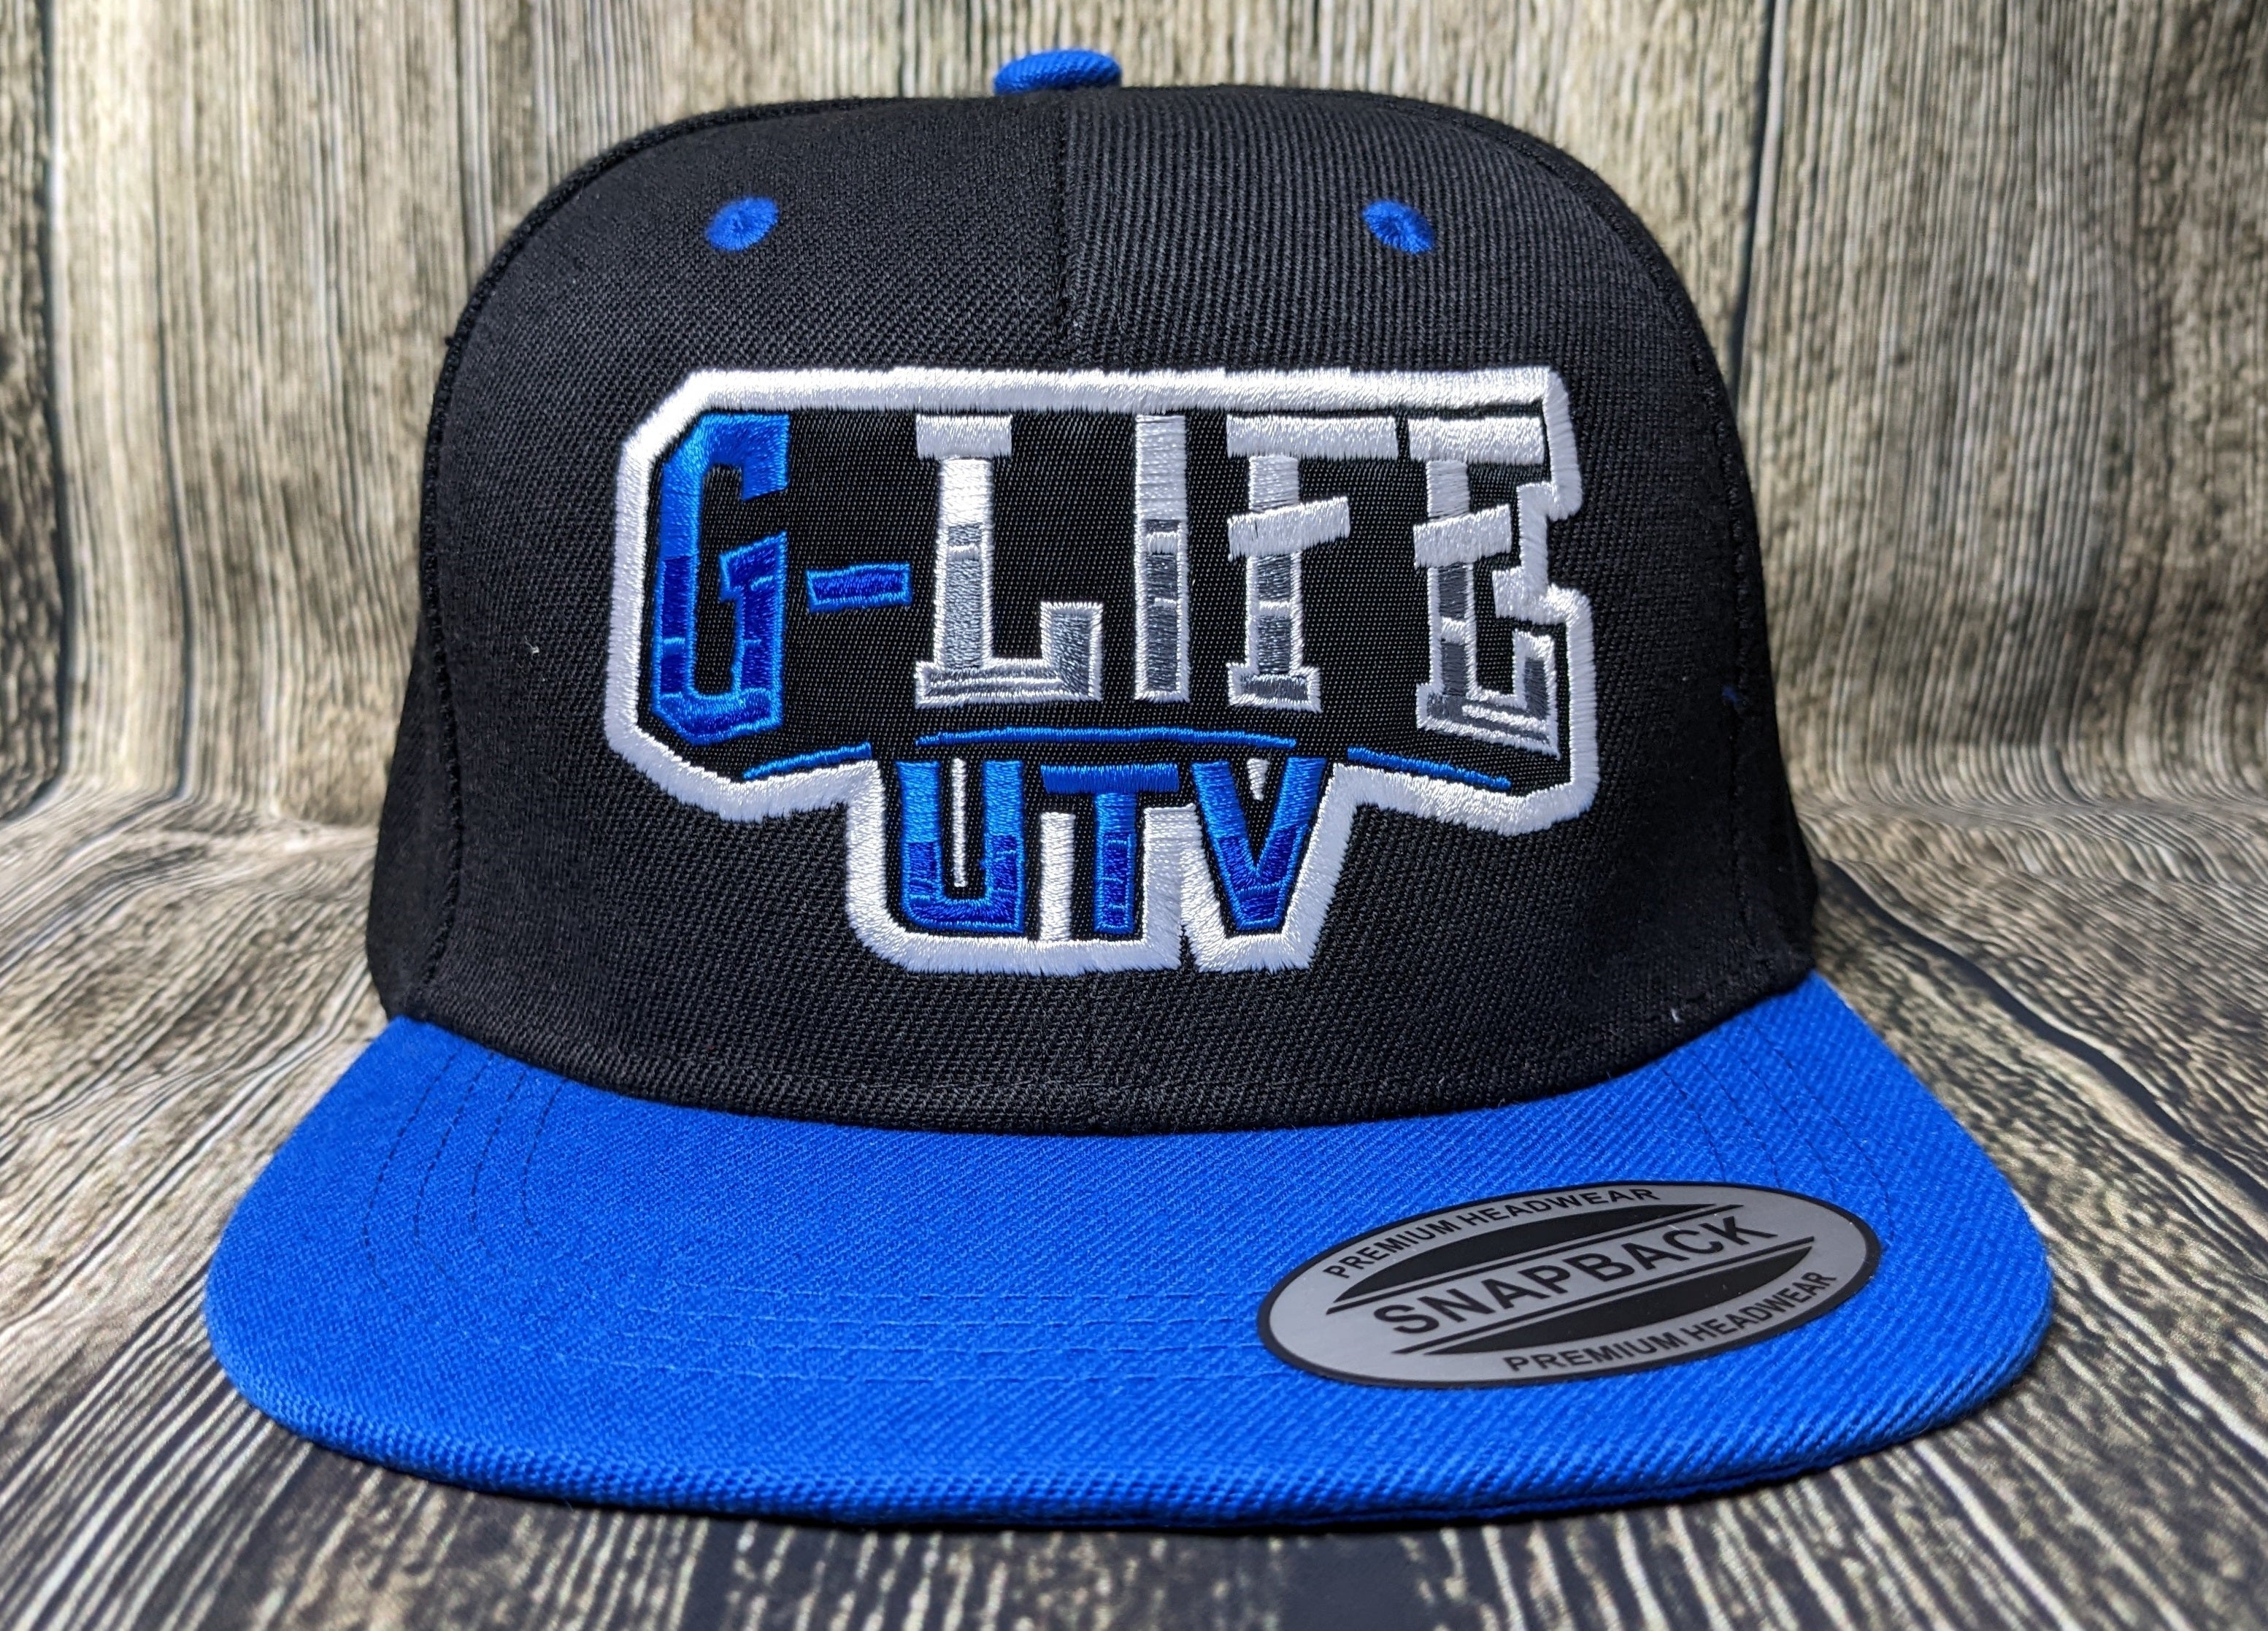 G Life UTV - Black/Blue Snapback Hat